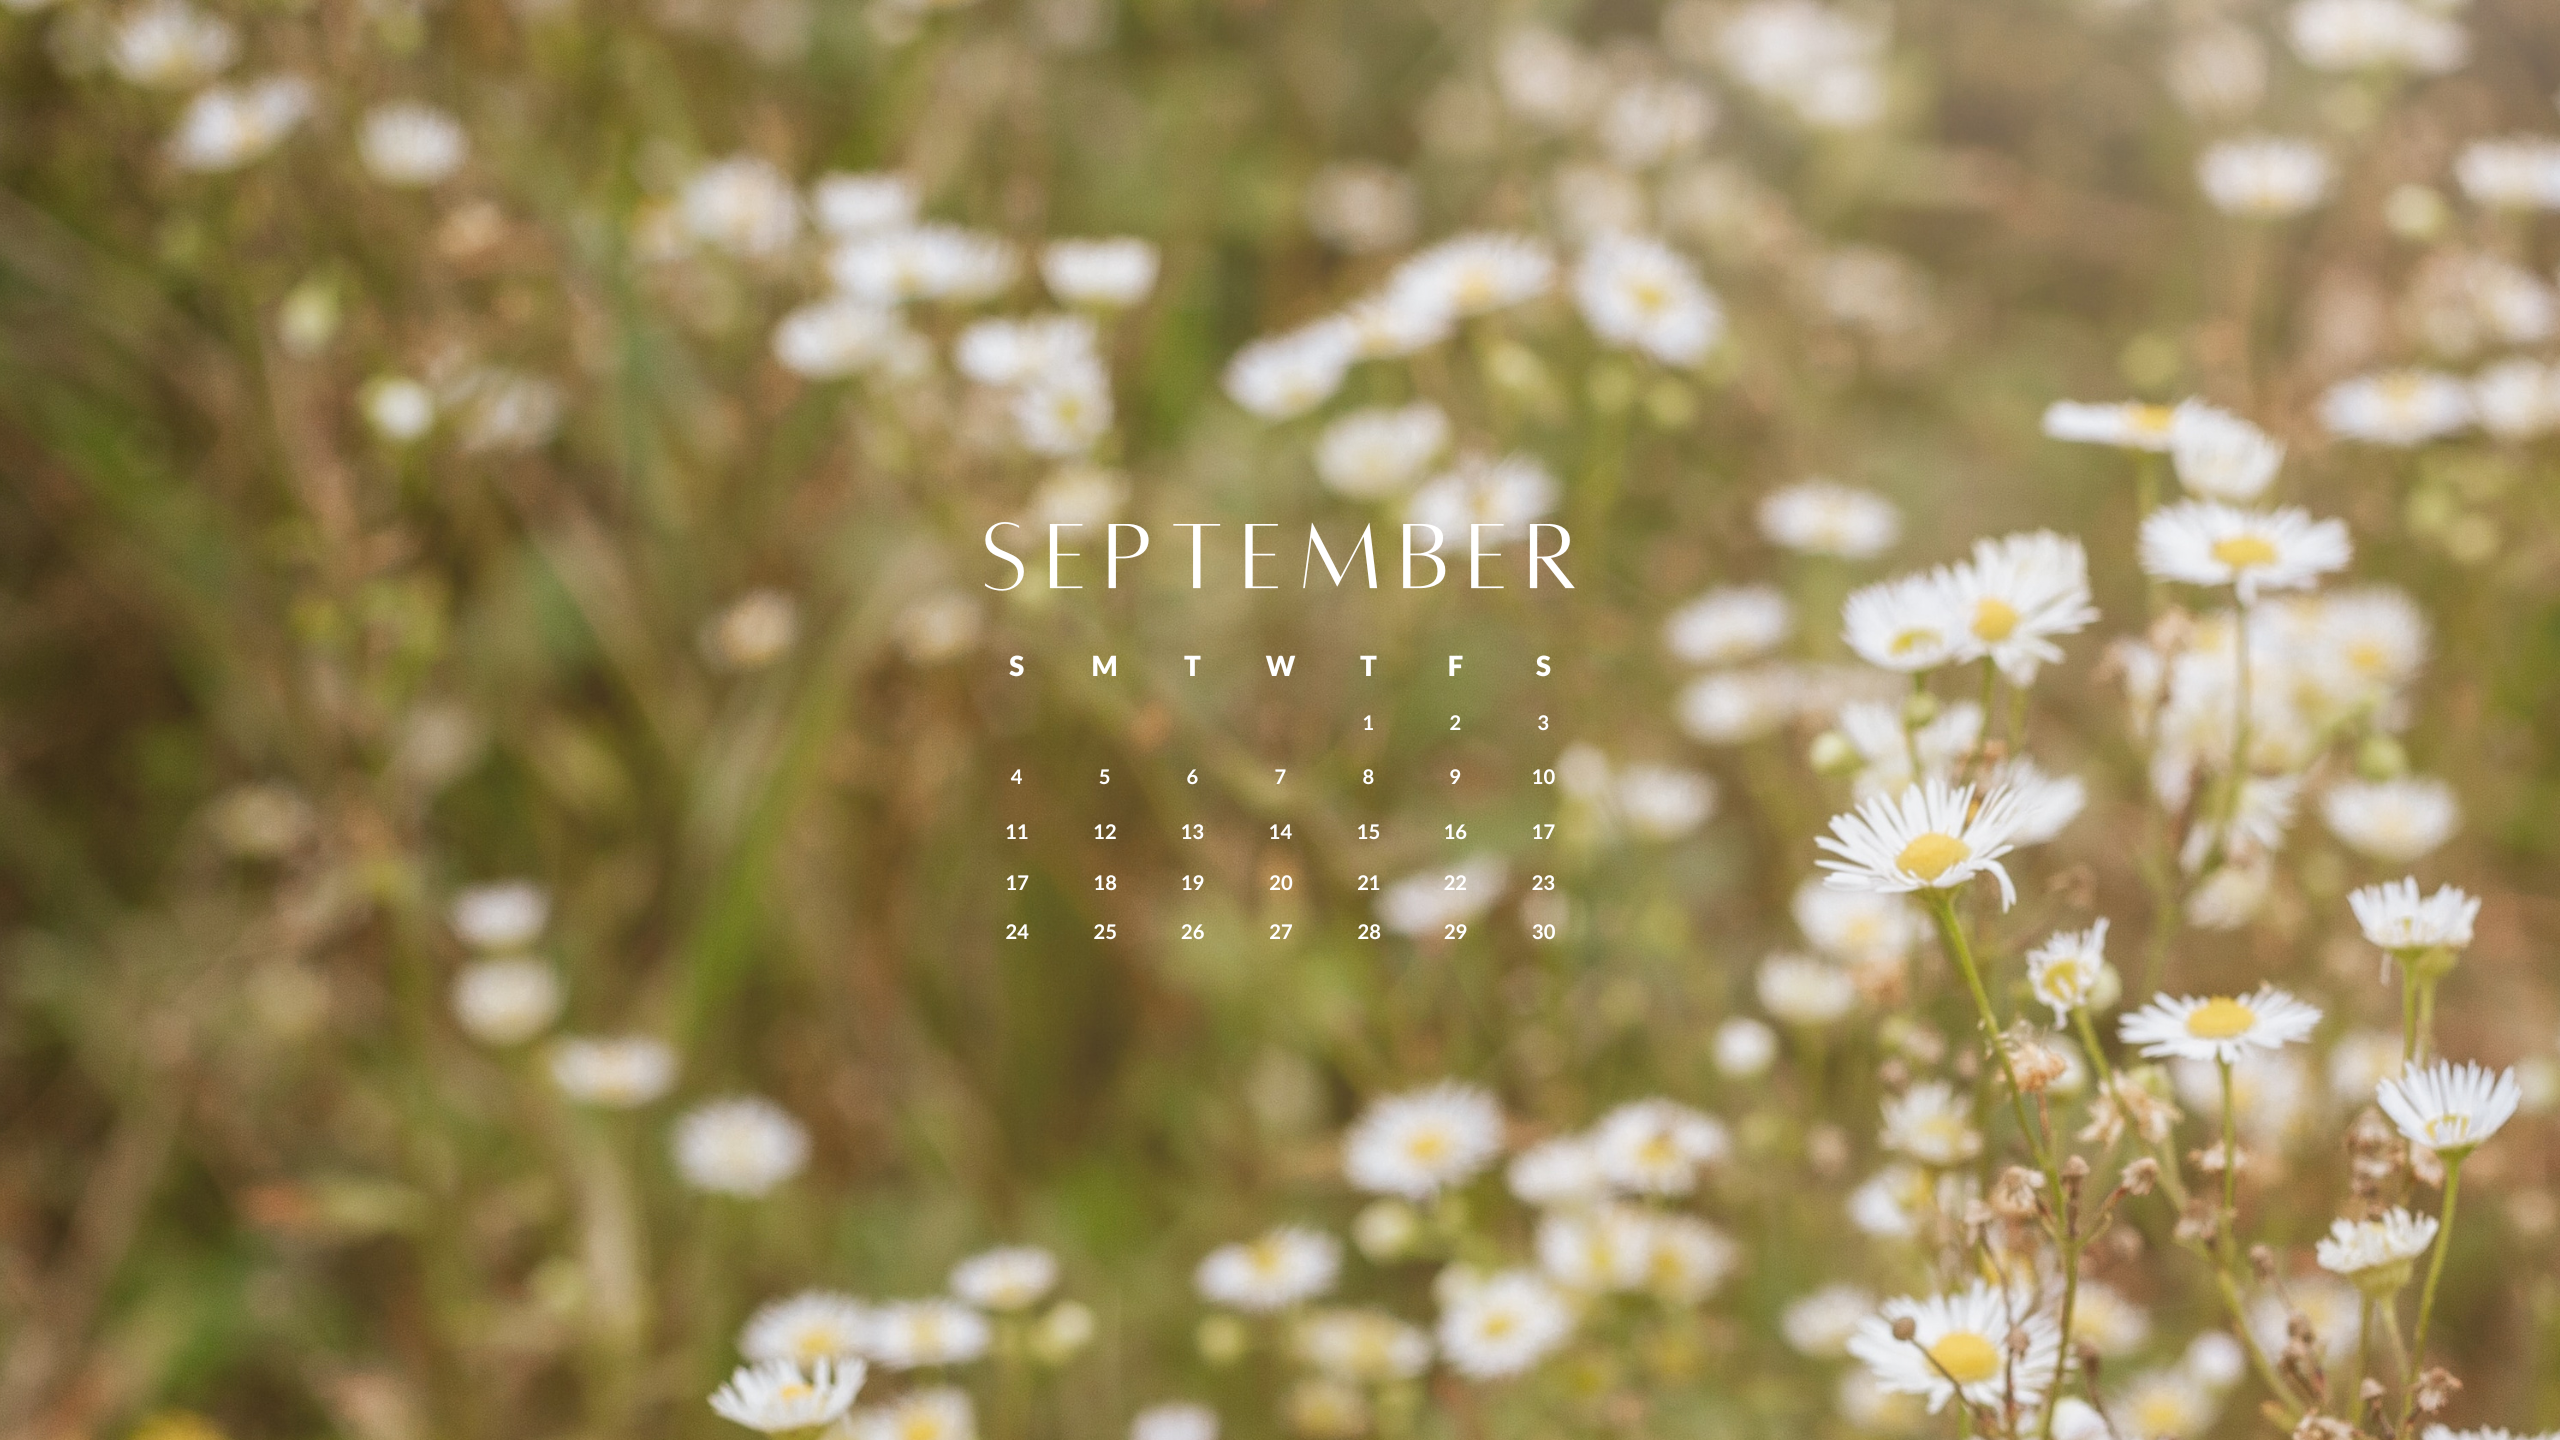 September Backgrounds: Free Download for Your Phone, Tablet or Desktop —  The Morning